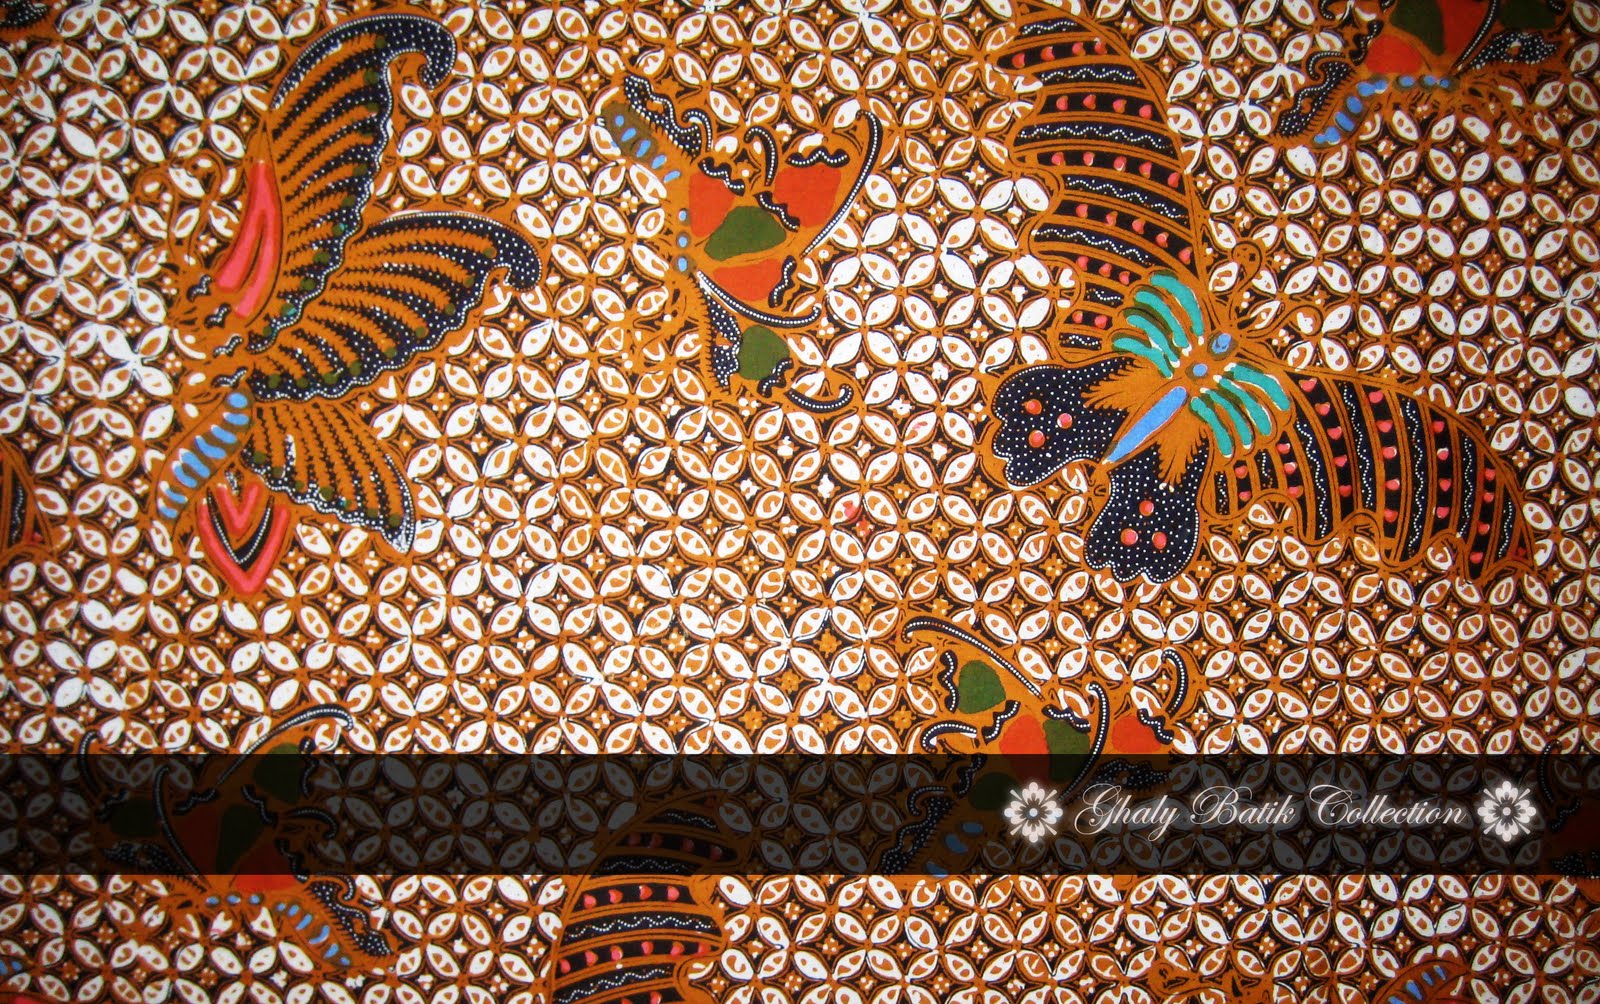 Ghaly Batik Collection s Batik Khas Solo